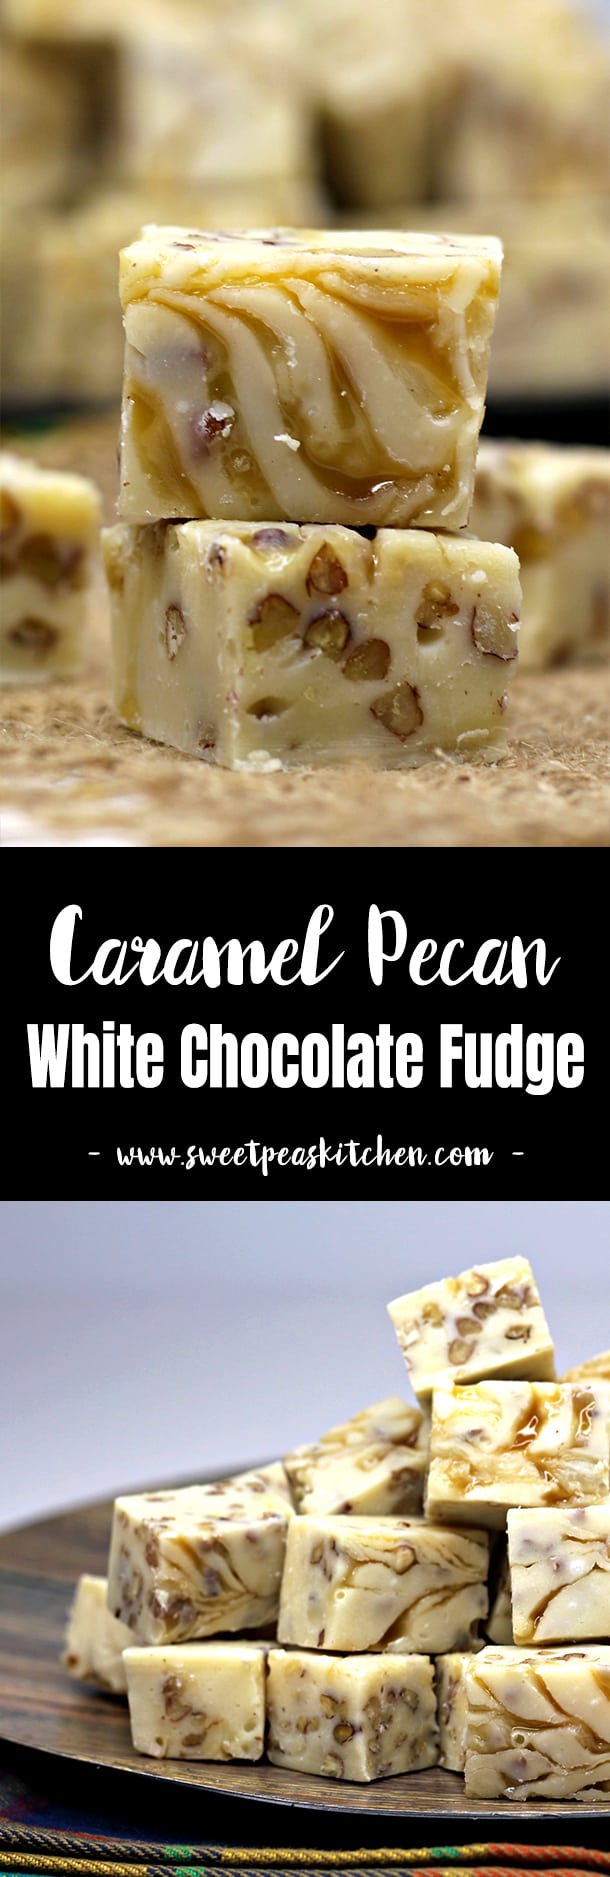 Caramel Pecan White Chocolate Fudge